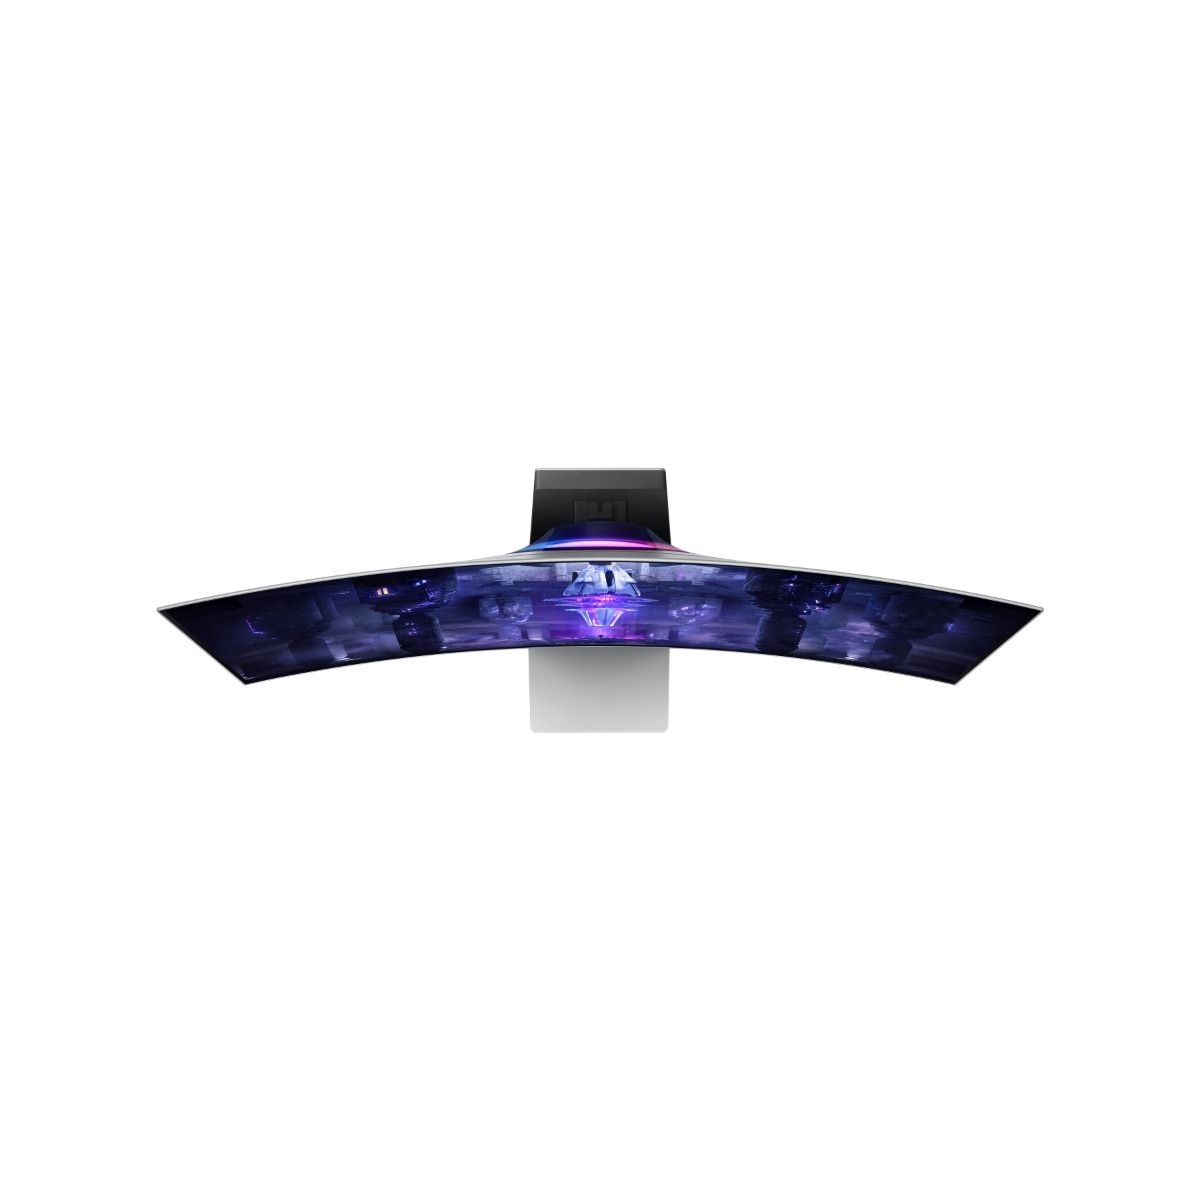 Samsung Odyssey G8 OLED 34" QHD Curved Gaming Monitor 175Hz